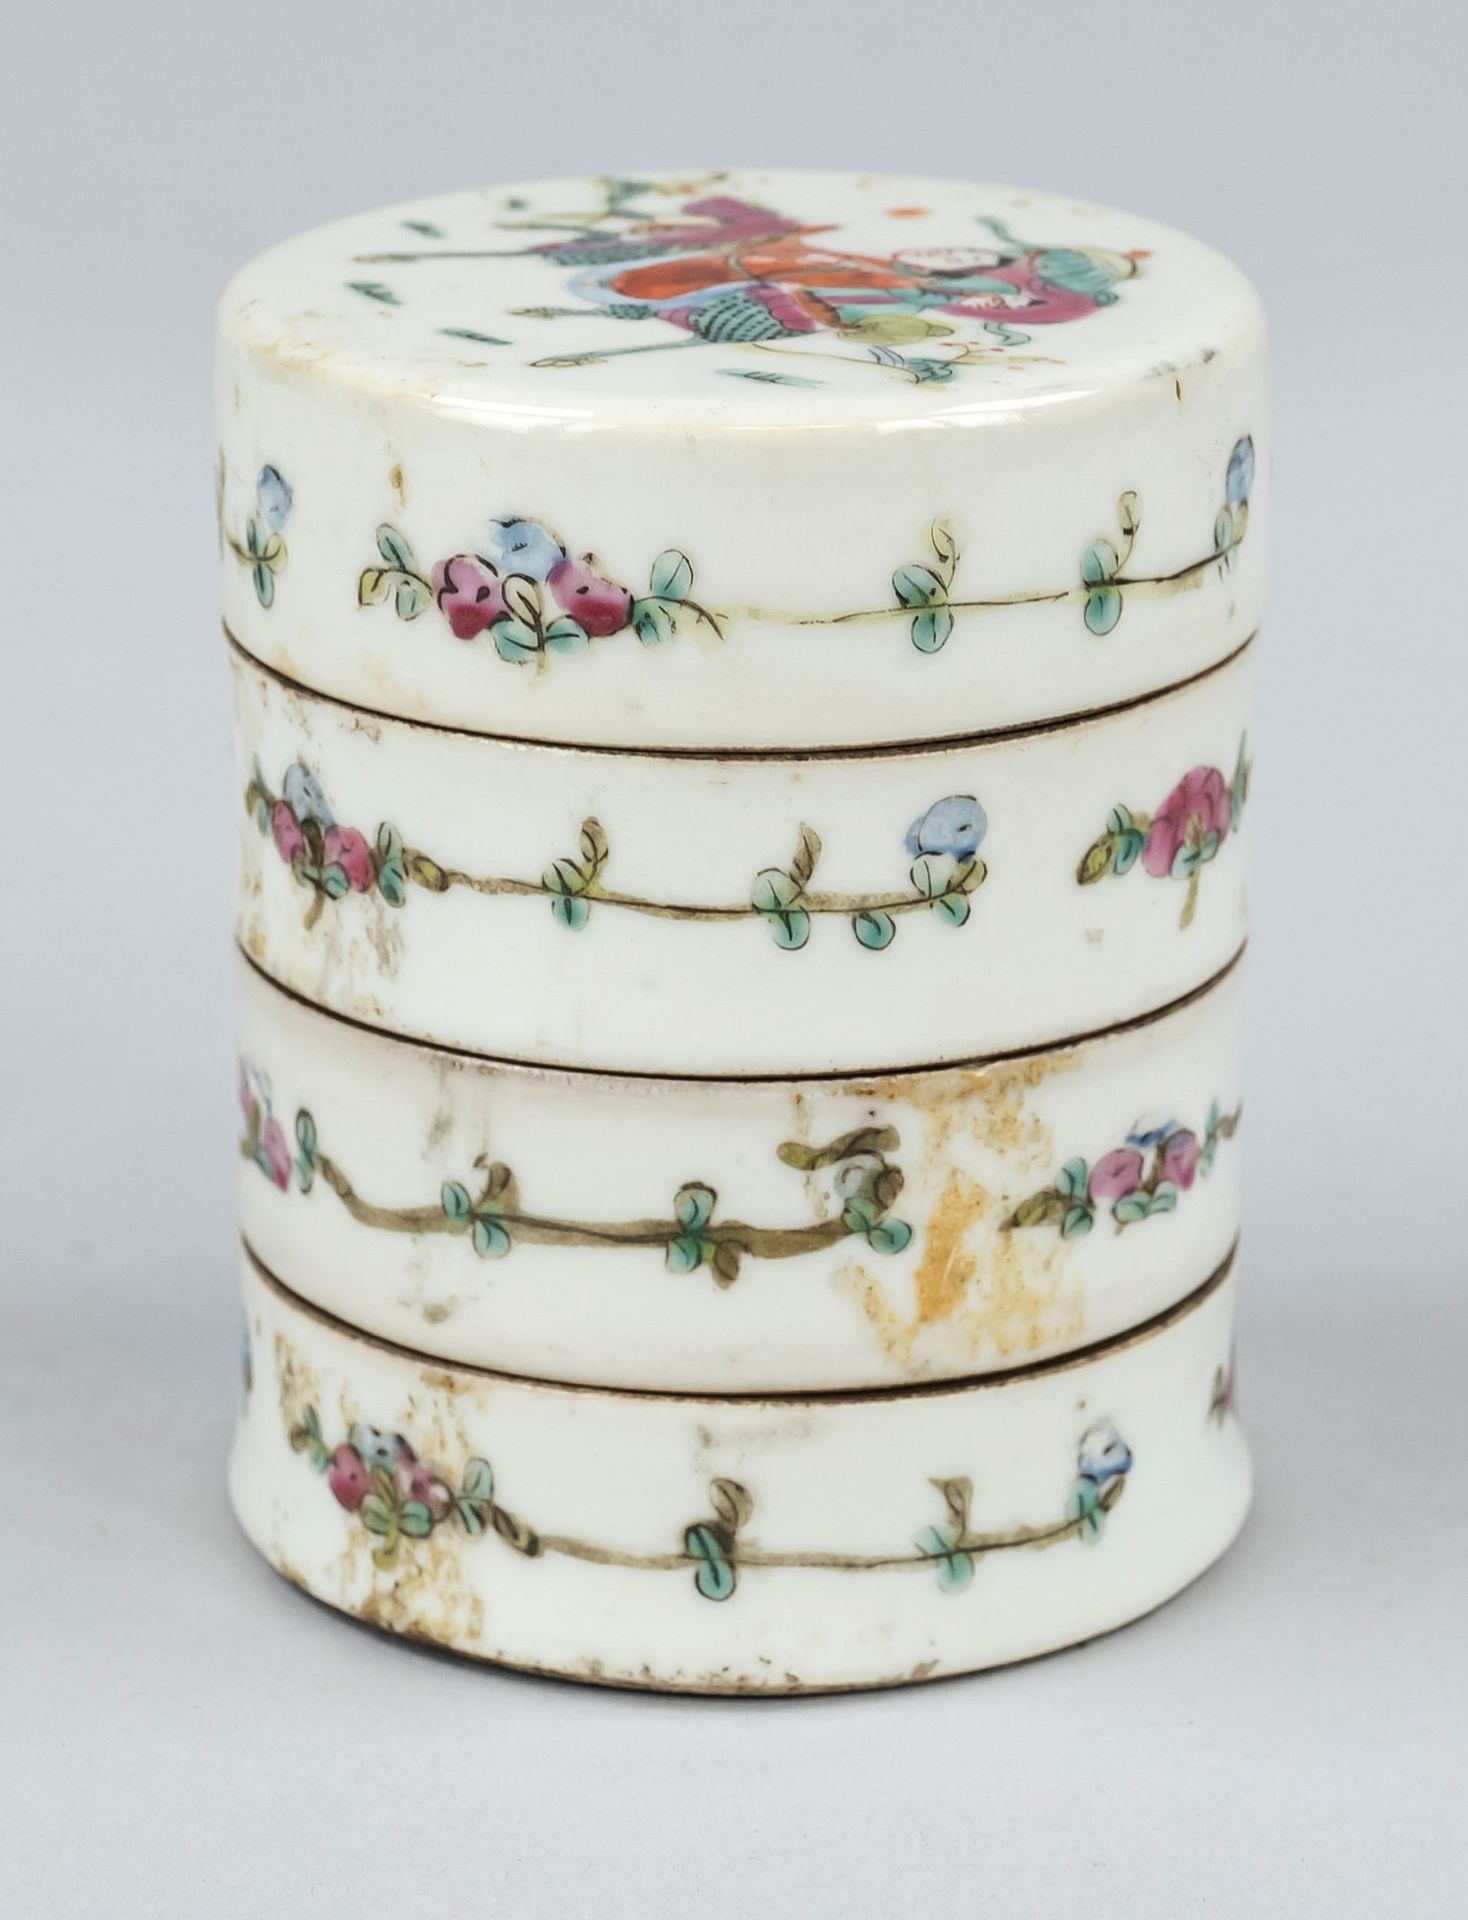 Four tier jar, China, Qing dynasty(1644-1912), 1st half 19th c., porcelain with polychrome glaze - Image 2 of 2